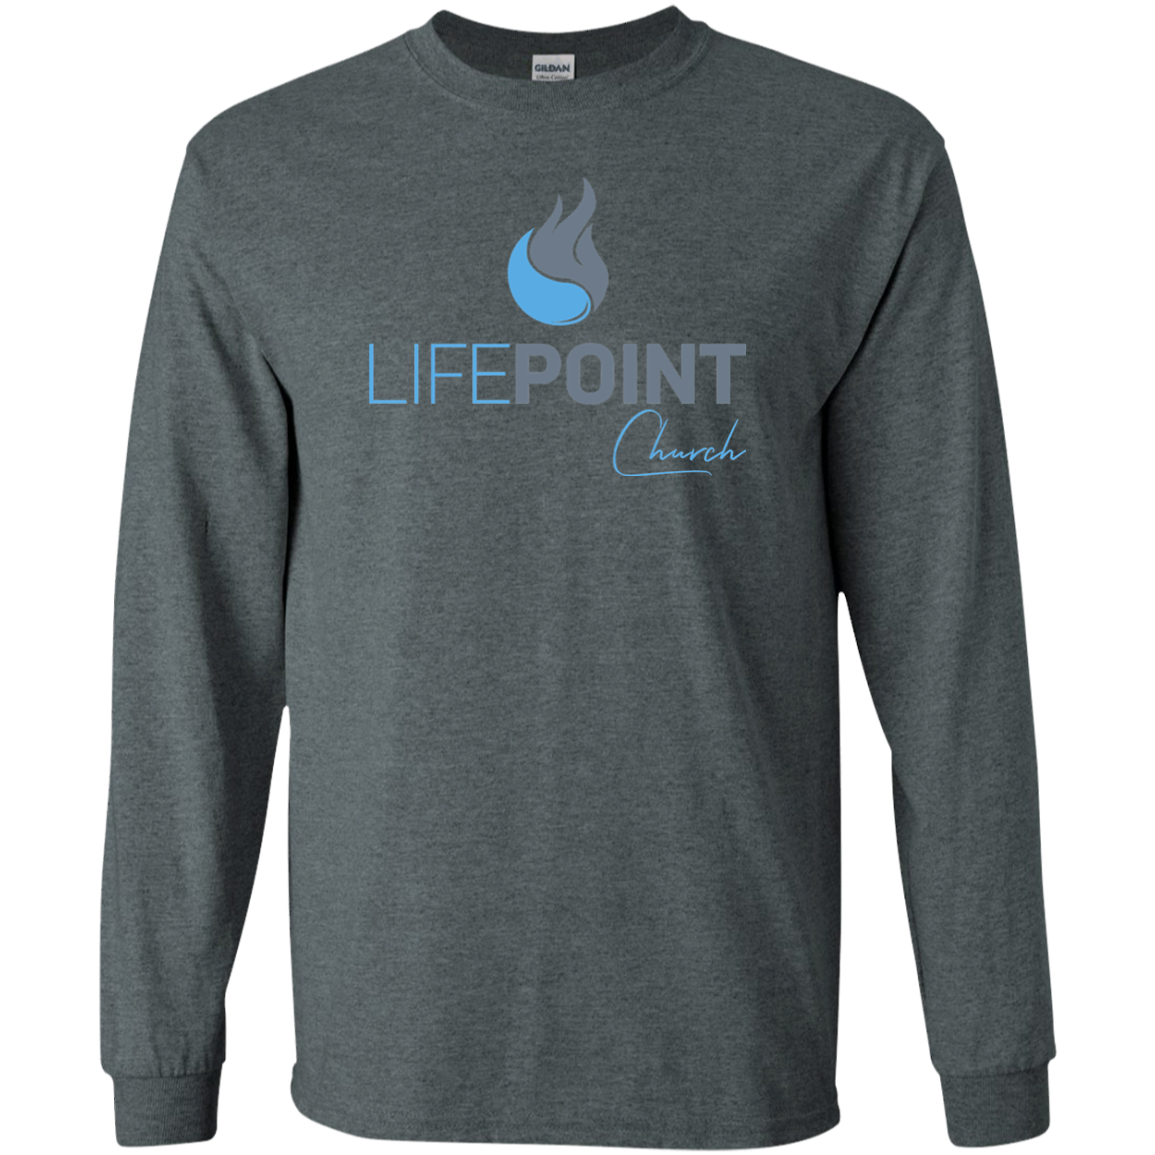 Life Point Ultra Cotton T-Shirt